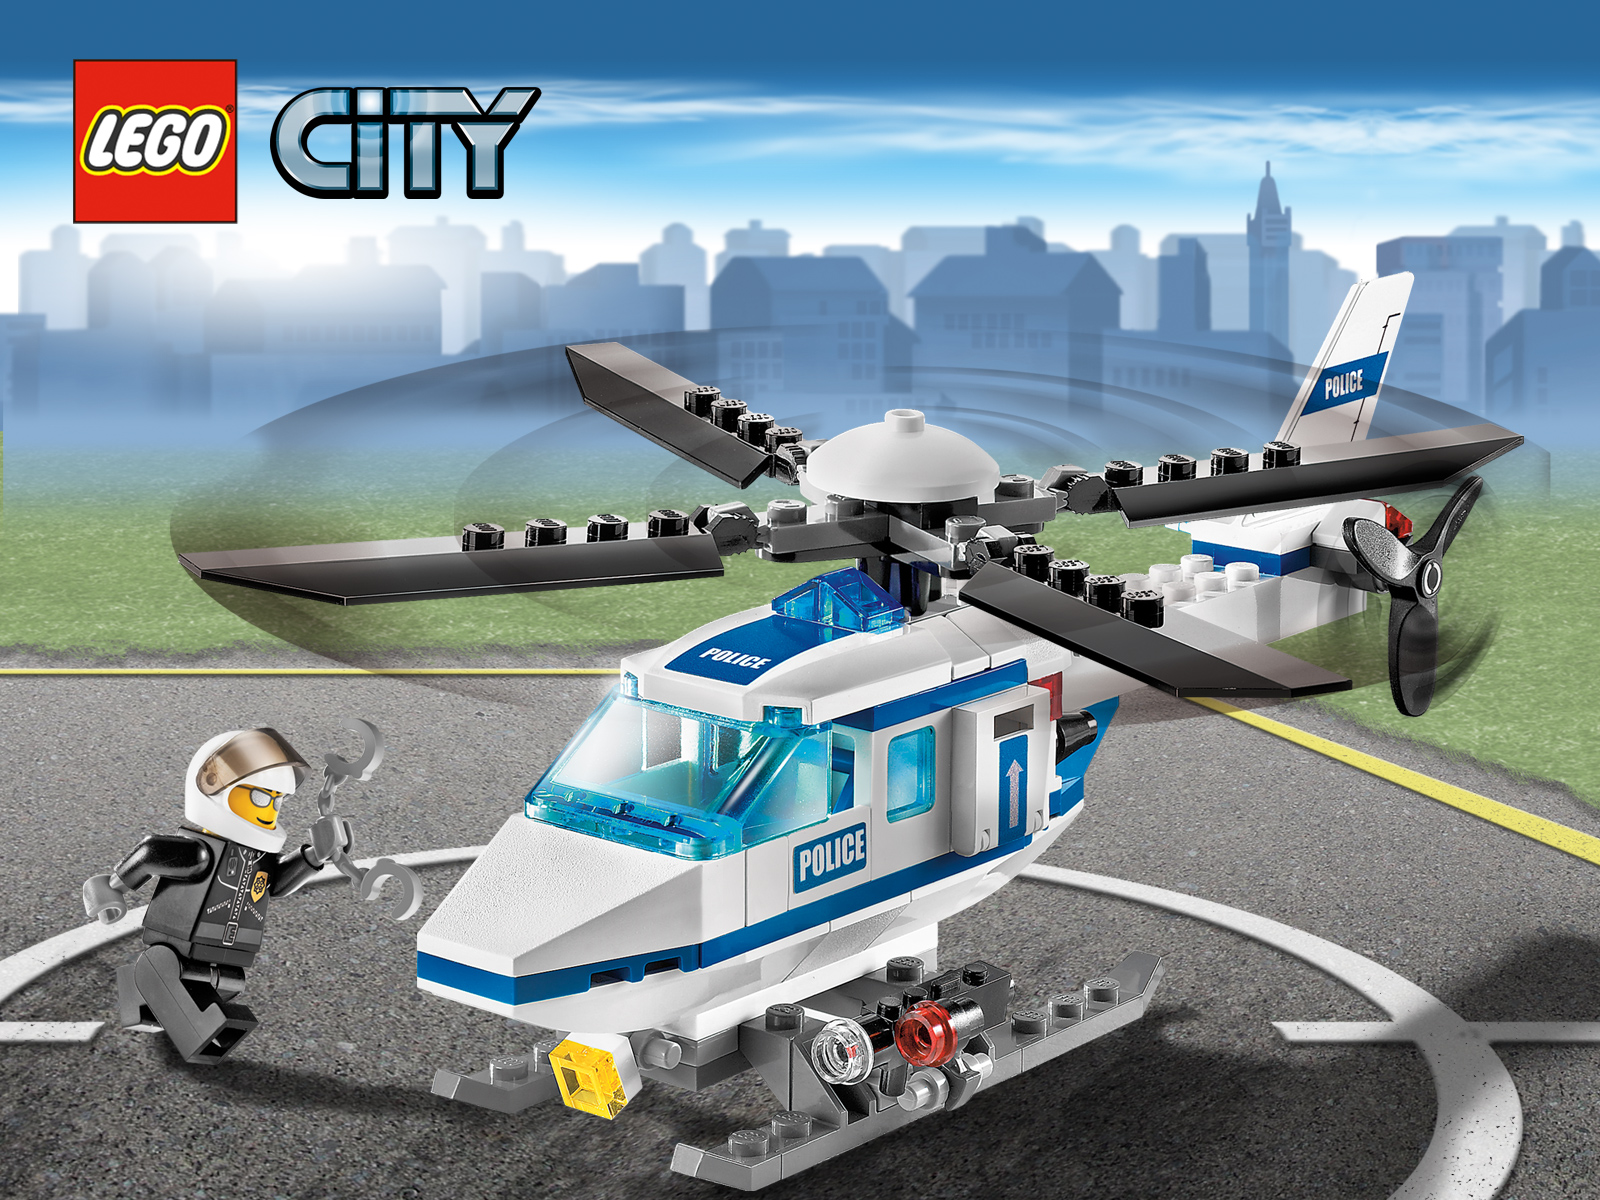 Lego City Desktop Wallpaper For HD Widescreen And